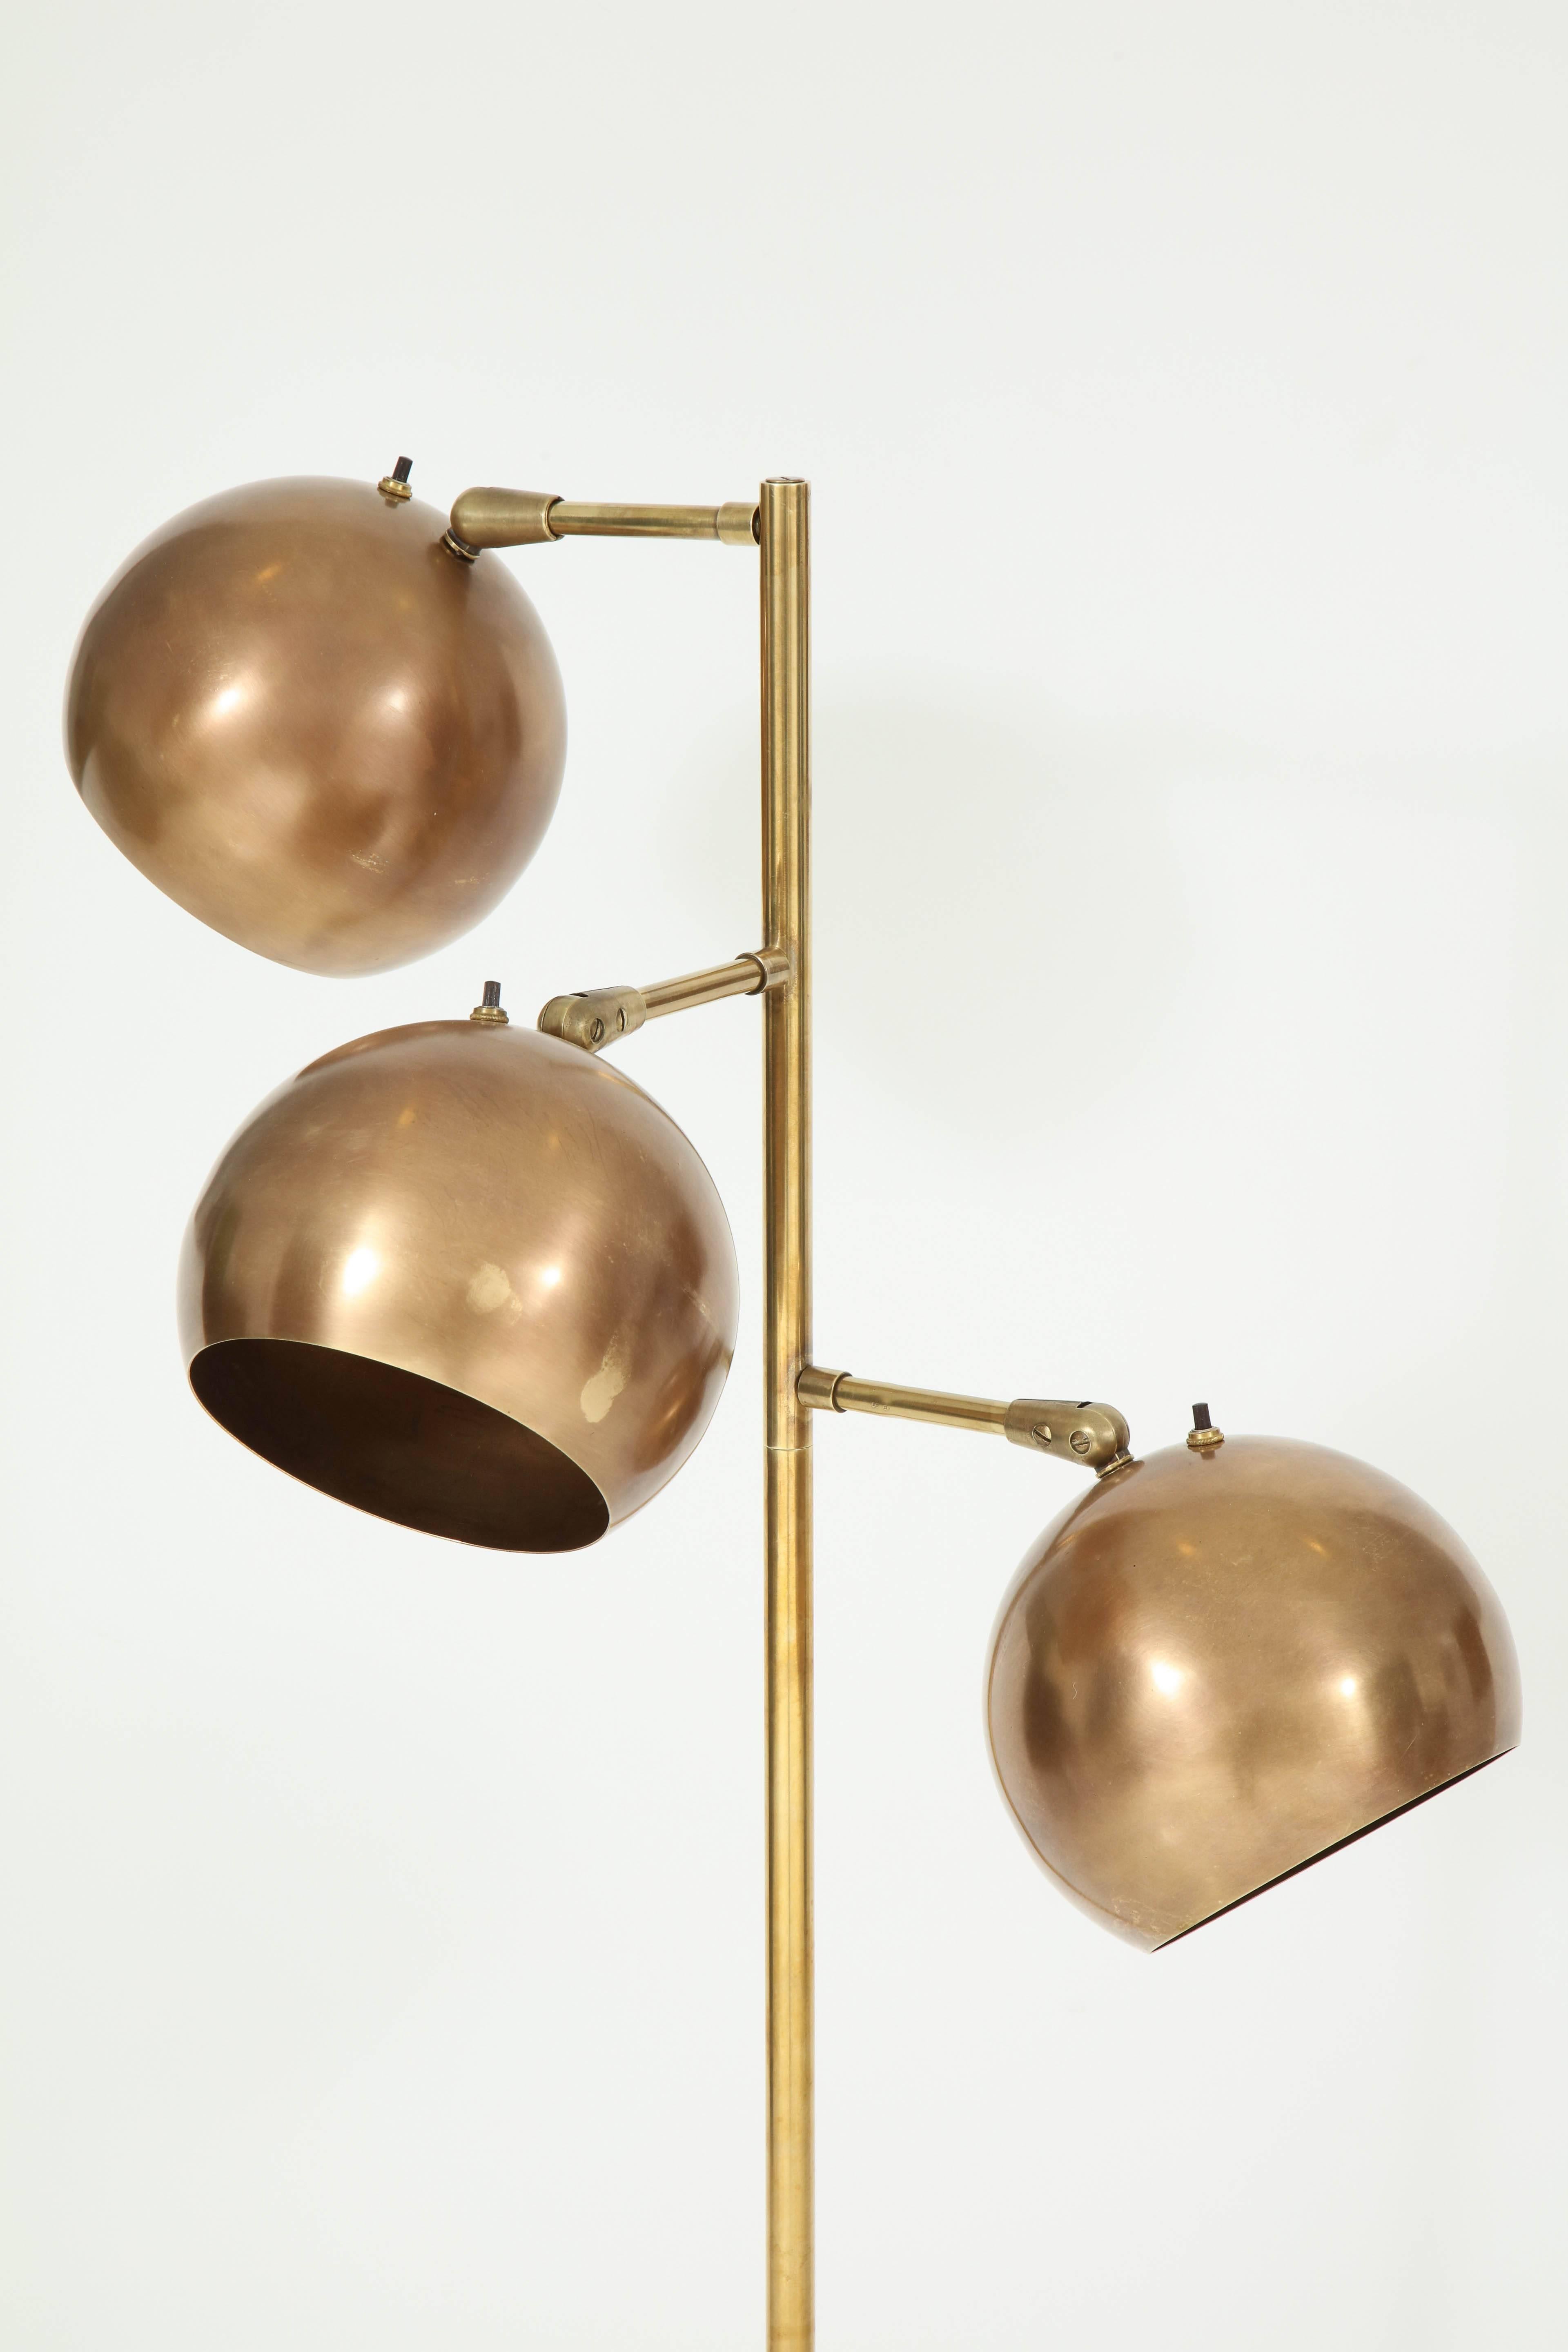 Elegant three orb floor lamp by Kovacs, patinated brass, rewired.